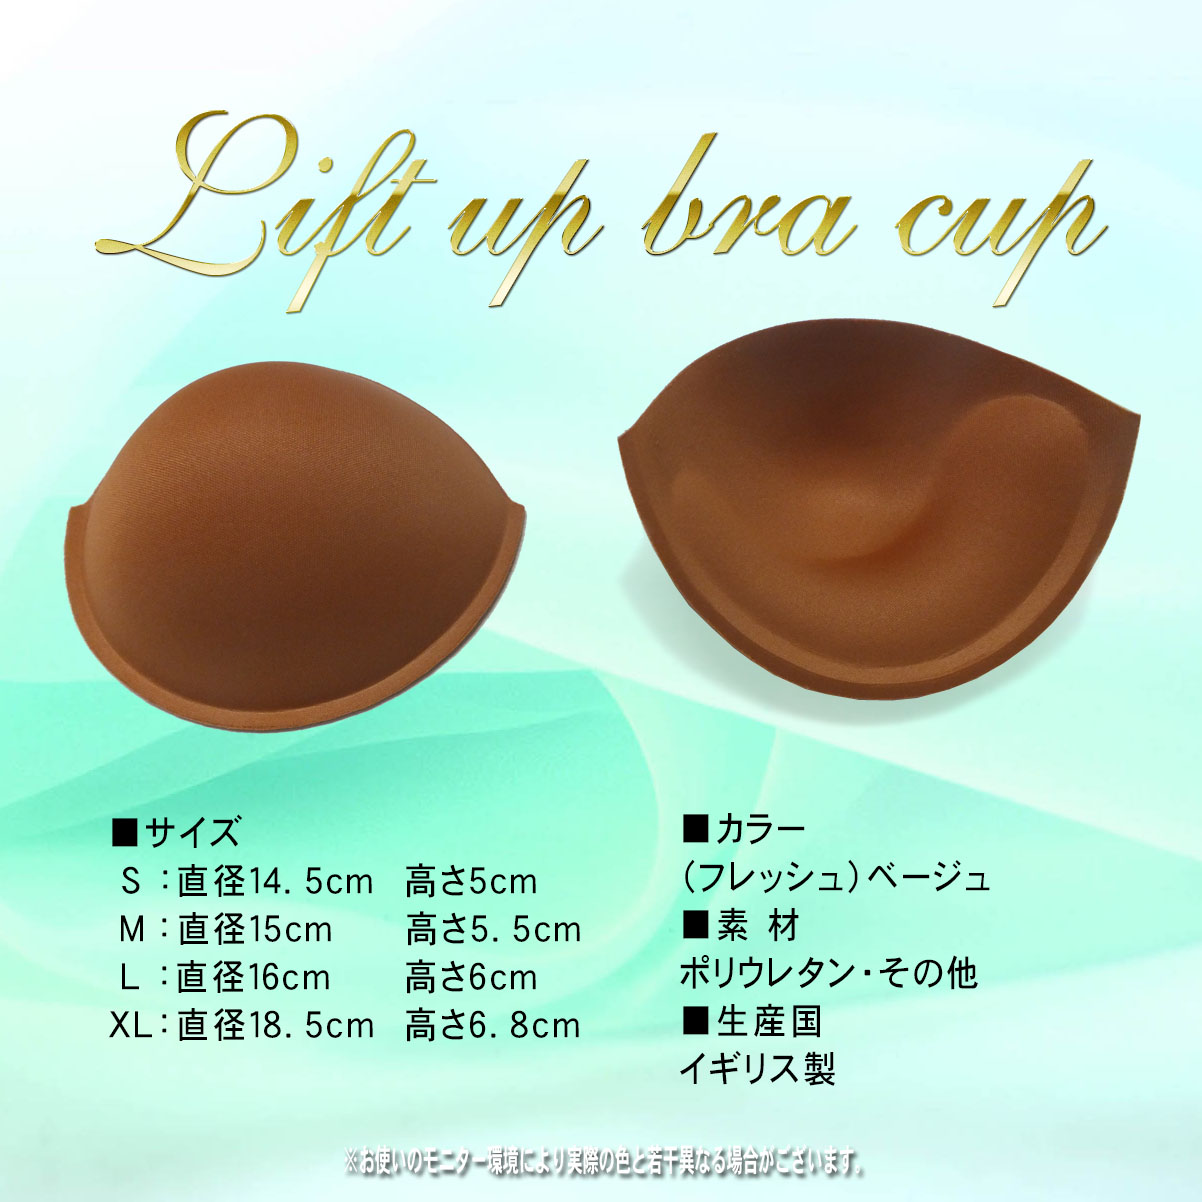 lift_up_bra_cup